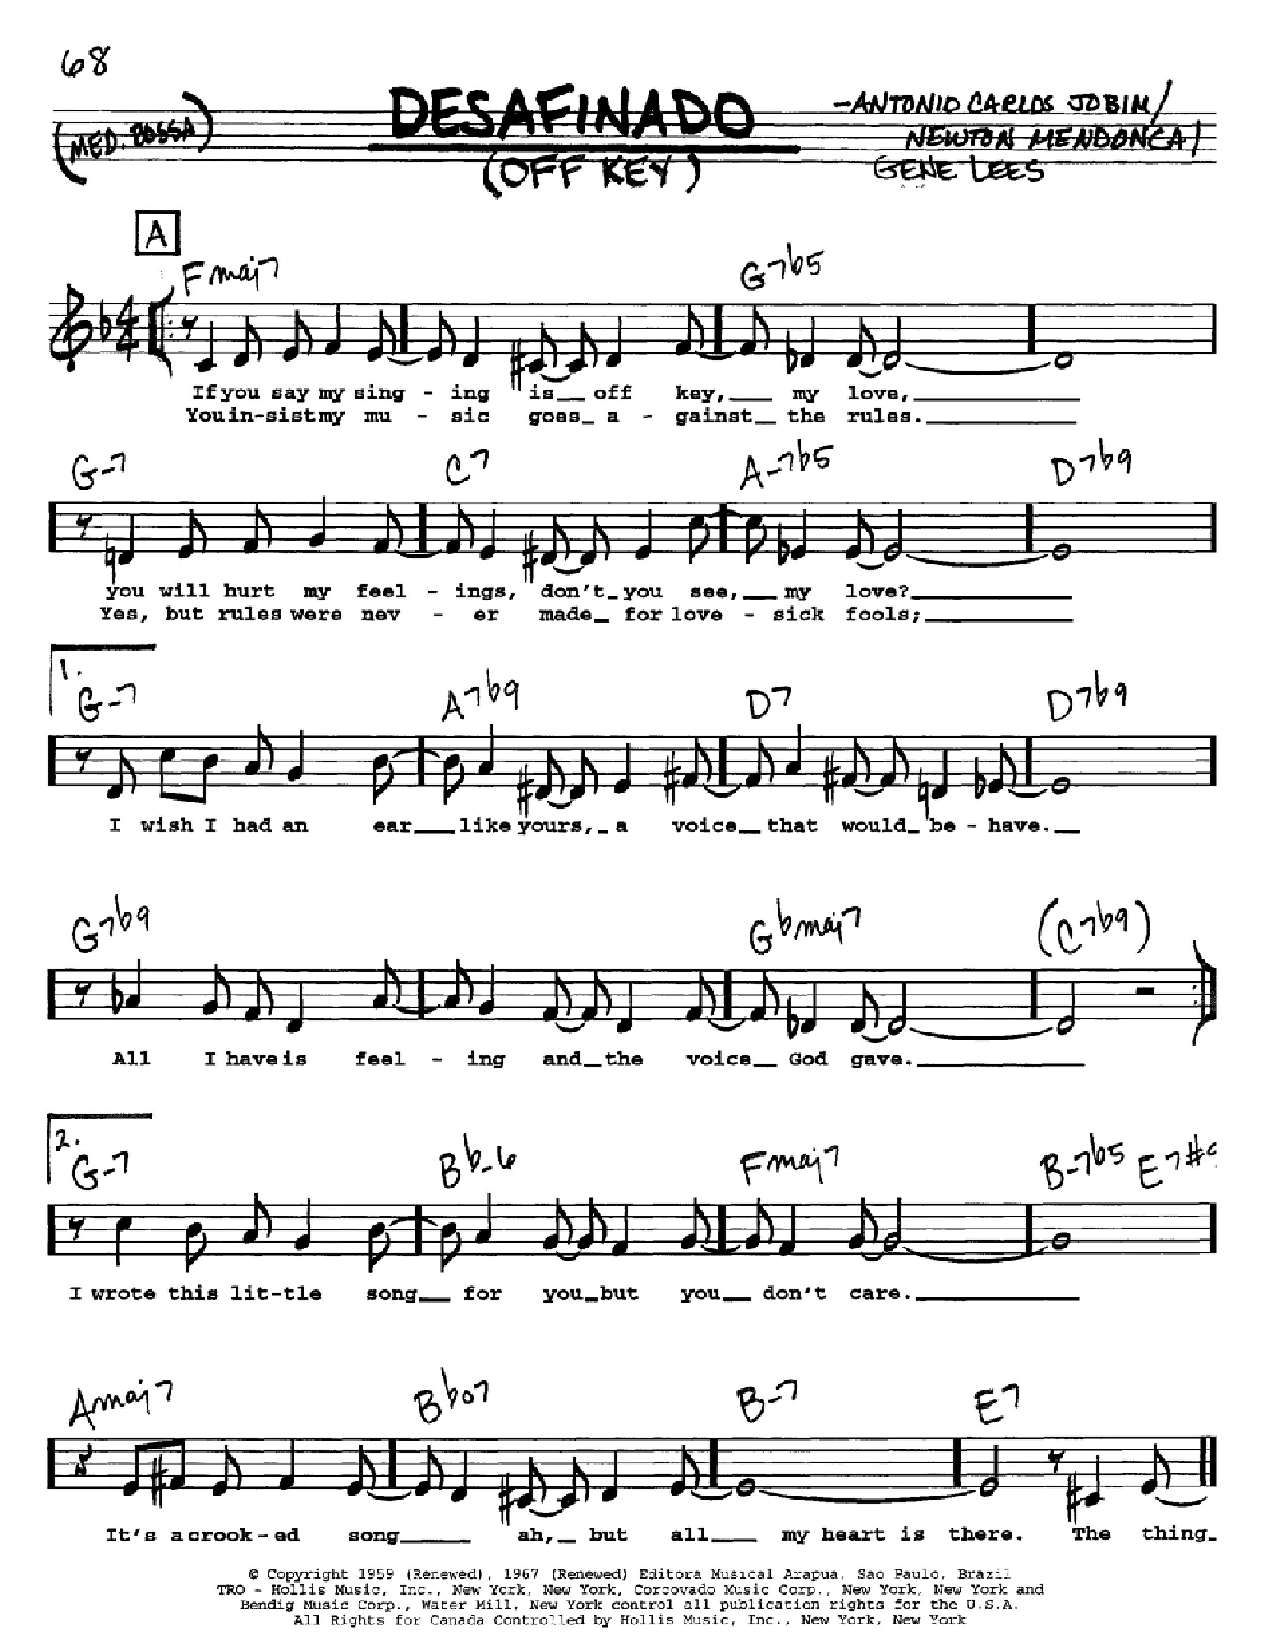 Antonio Carlos Jobim Desafinado (Off Key) Sheet Music Notes & Chords for Guitar Tab - Download or Print PDF